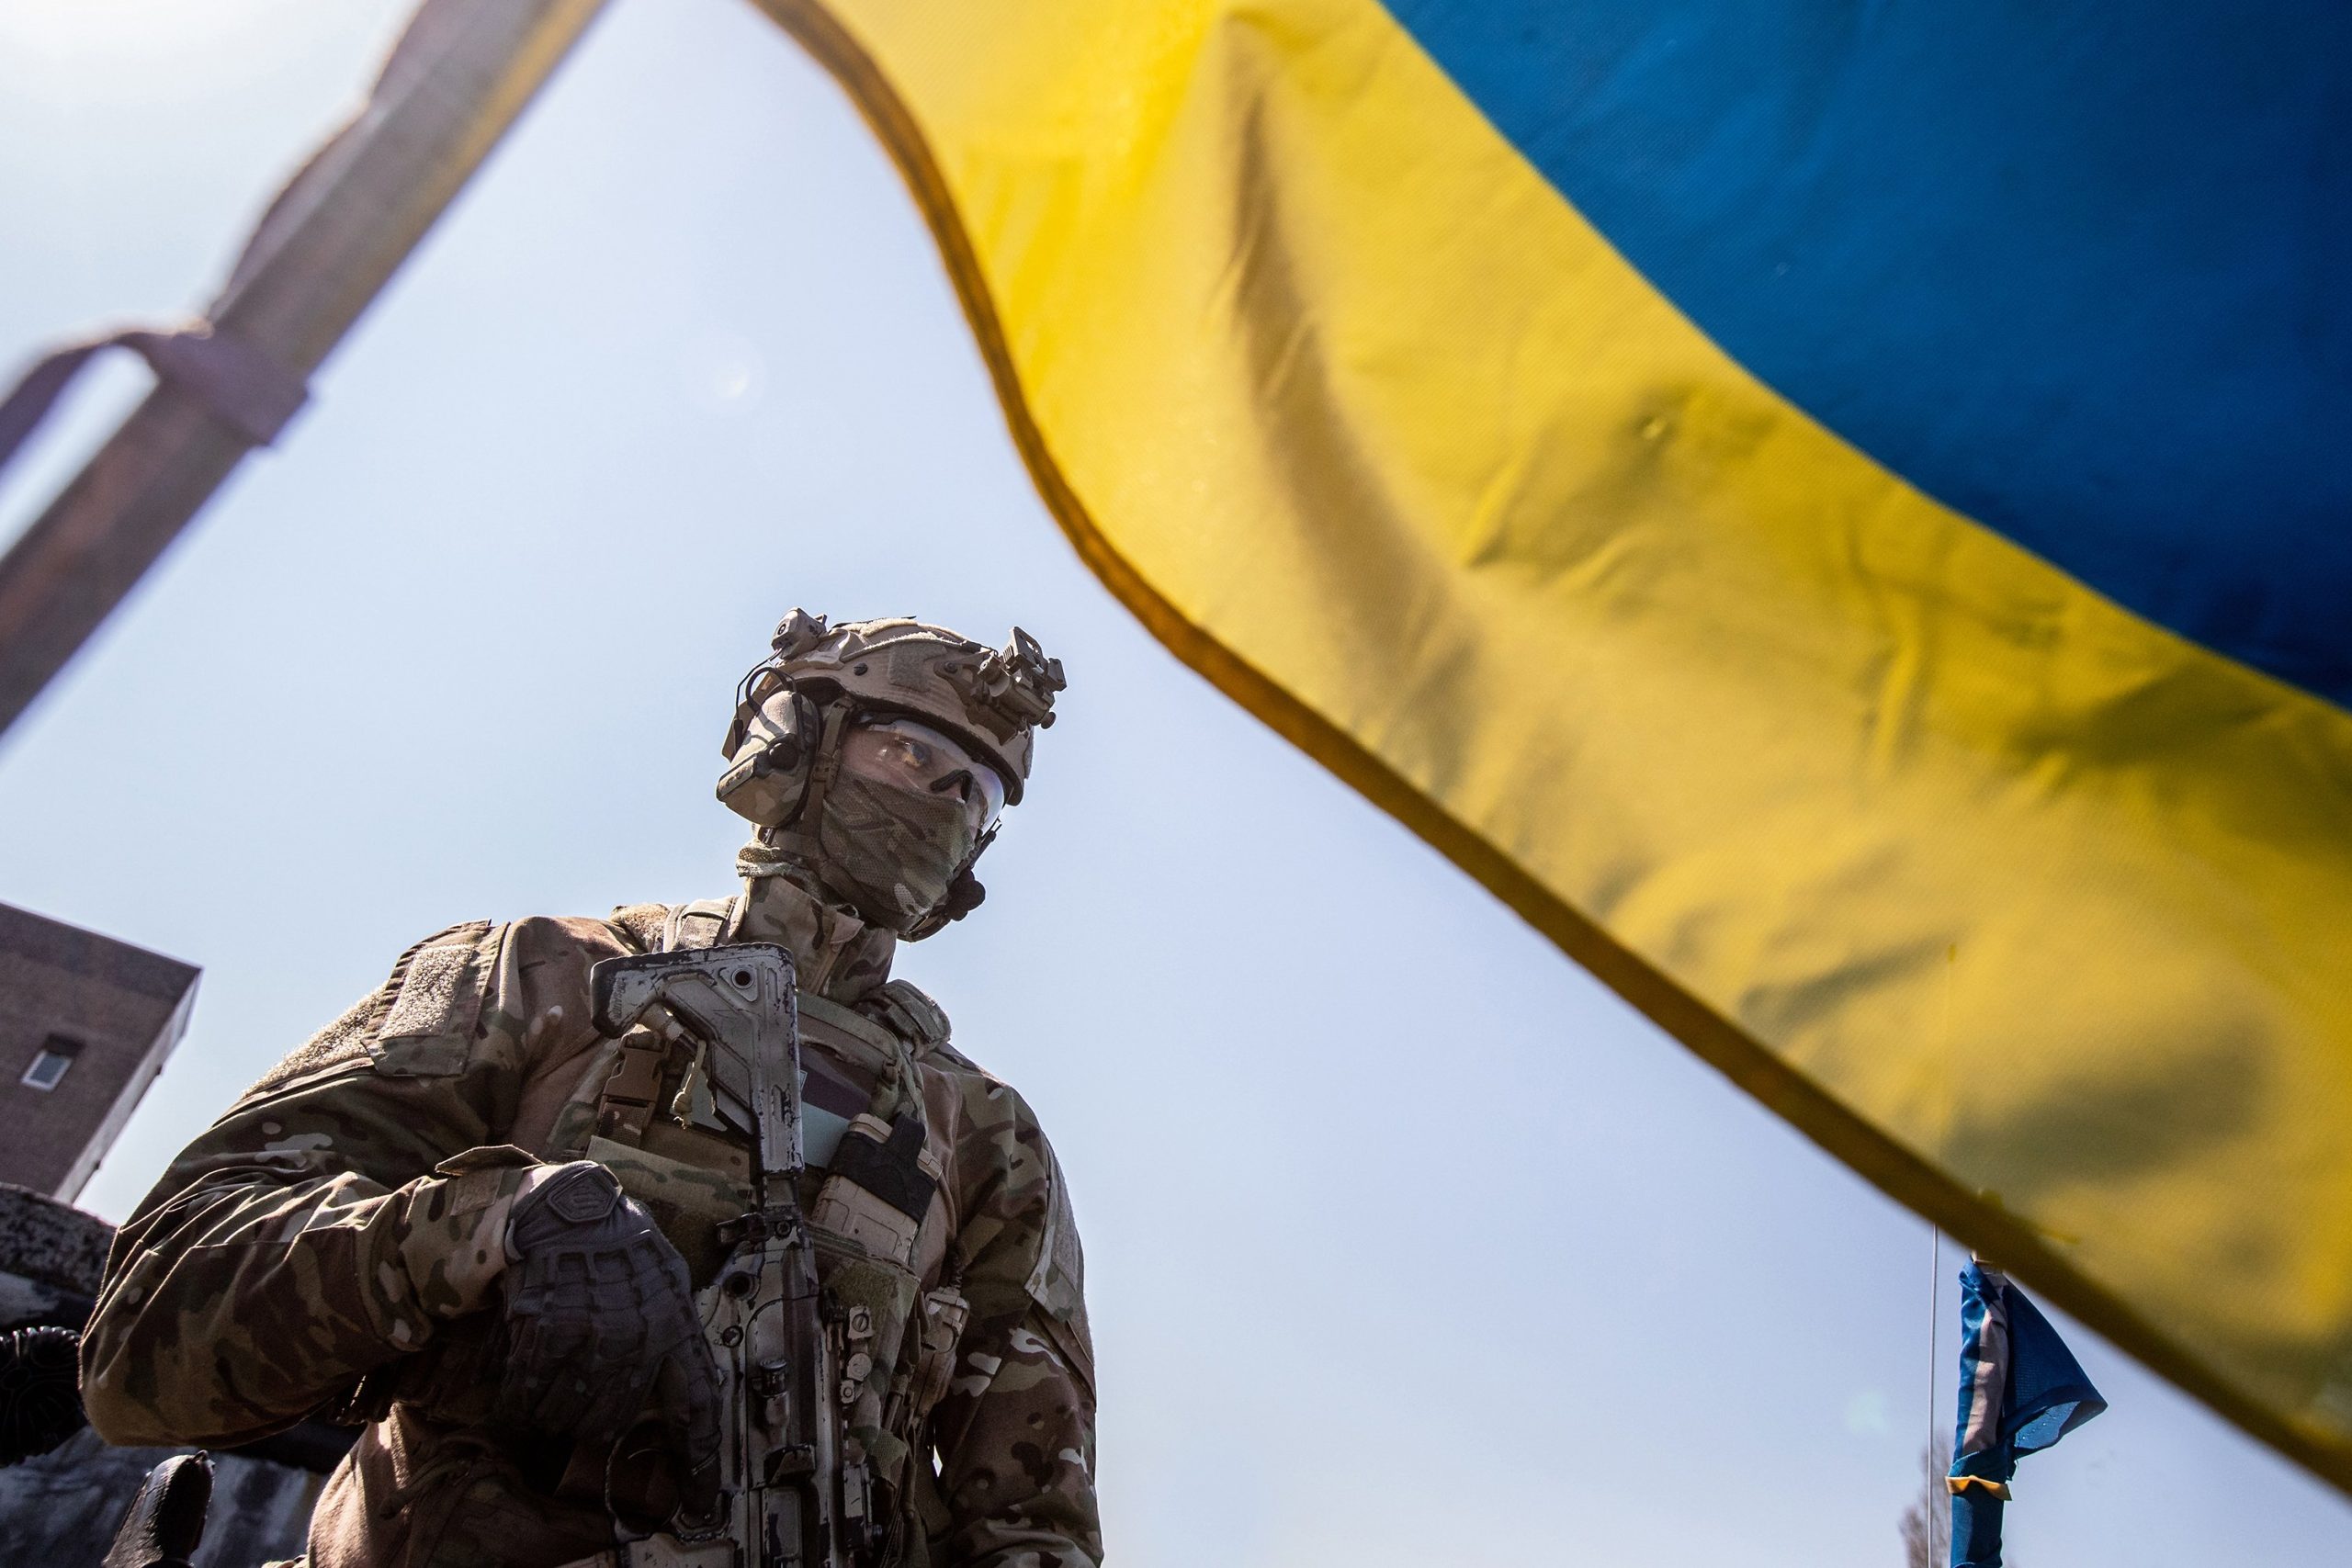 Counter terroriam - ISIS praises Ukraine war